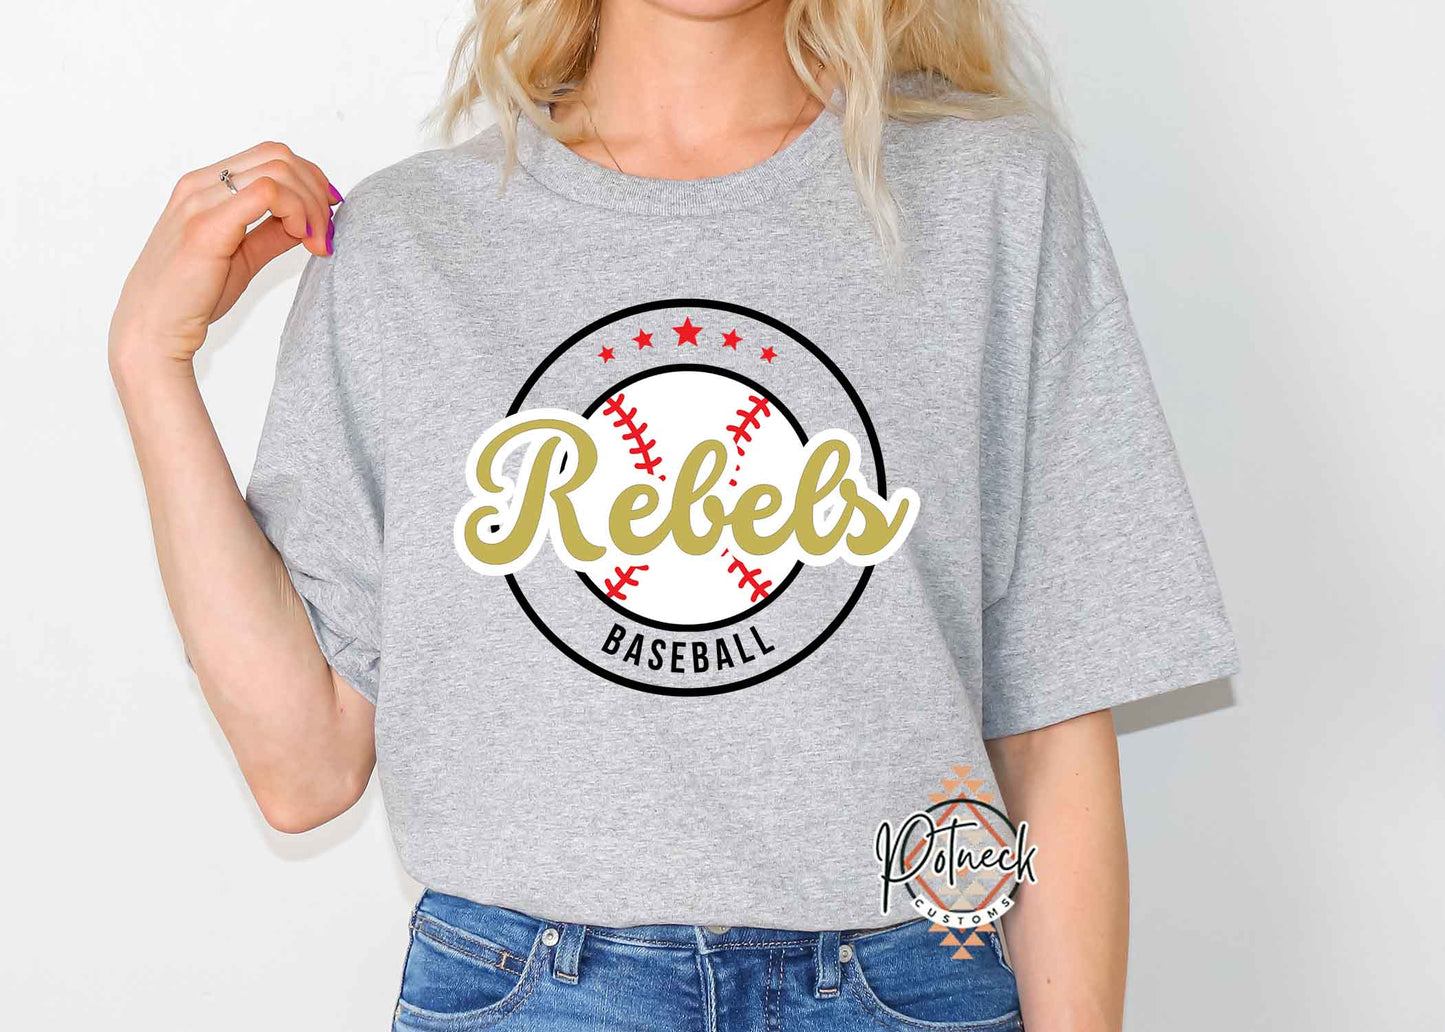 Rebels Baseball Grey shirt